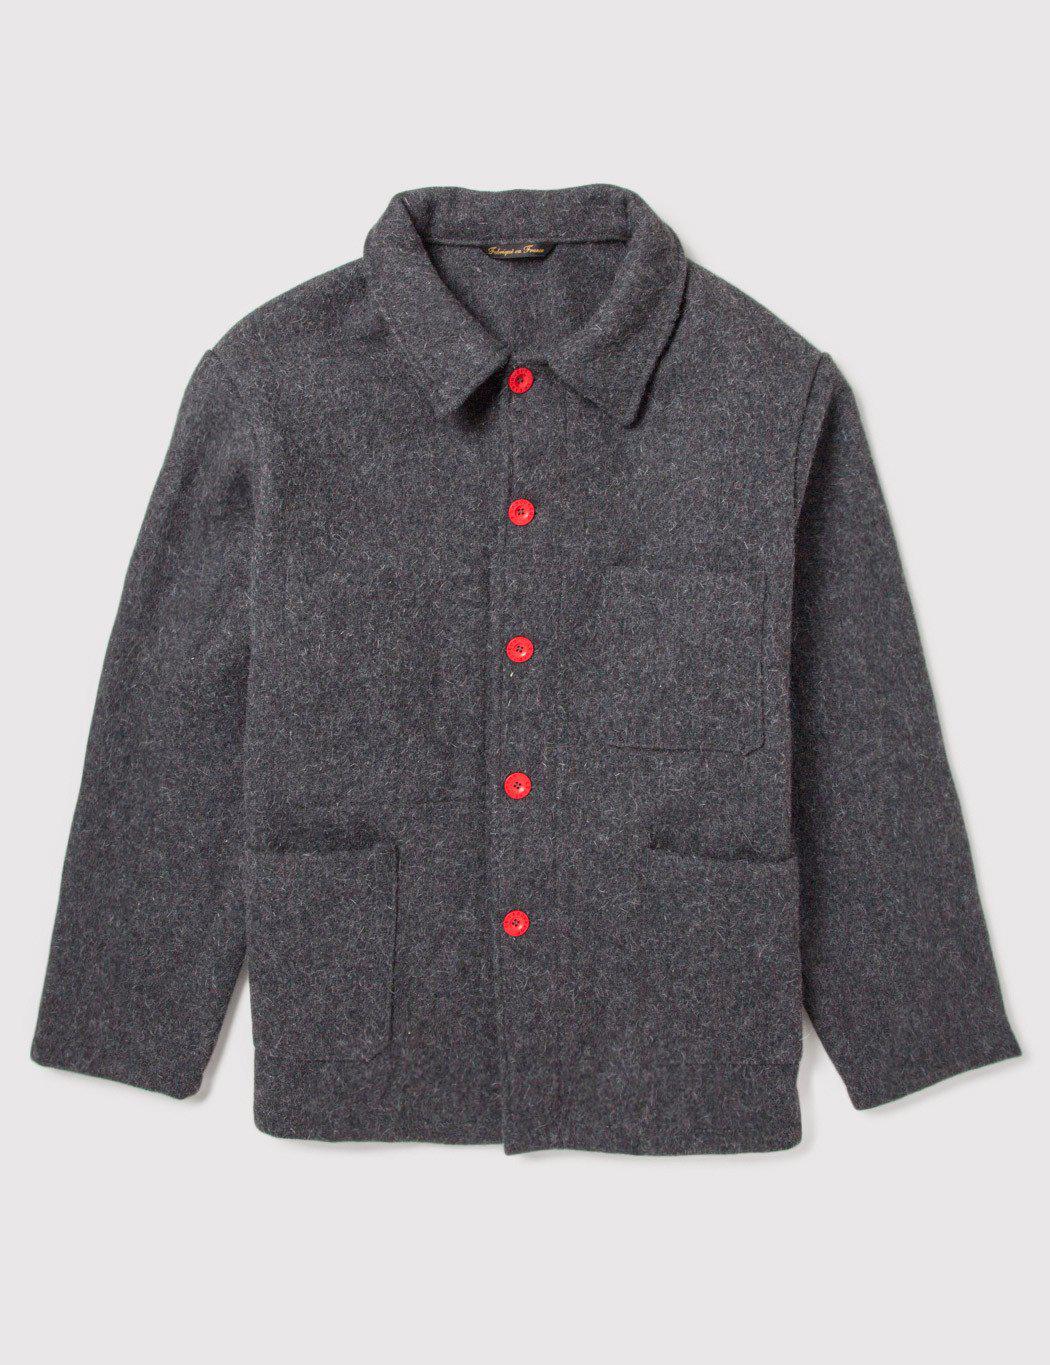 Lyst - Le Laboureur Wool Work Jacket in Gray for Men